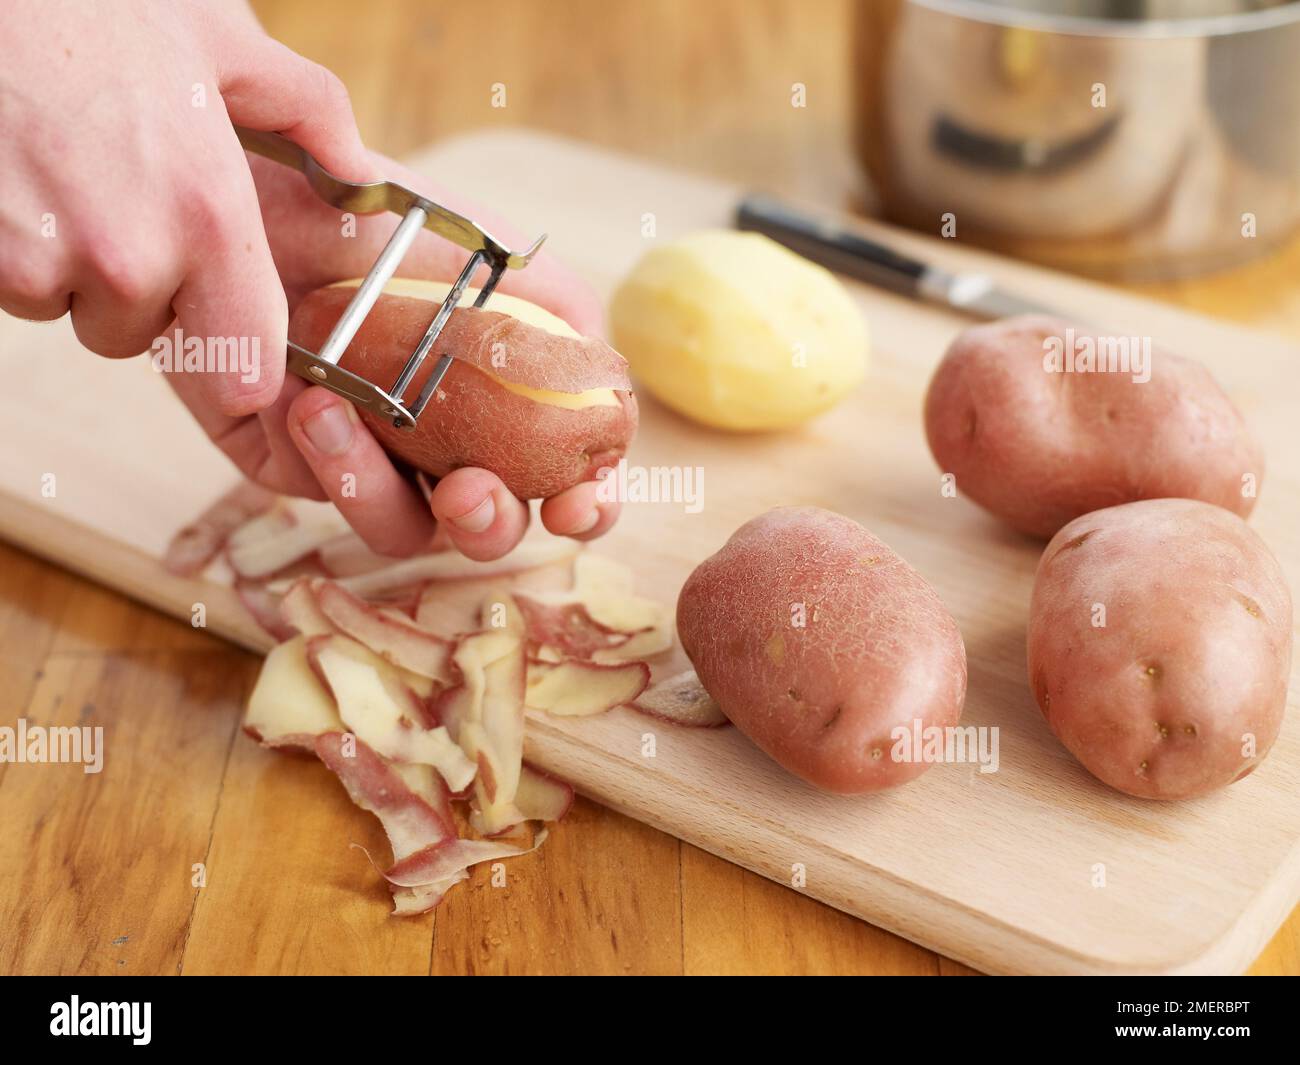 https://c8.alamy.com/comp/2MERBPT/peeling-potatoes-with-potato-peeler-2MERBPT.jpg